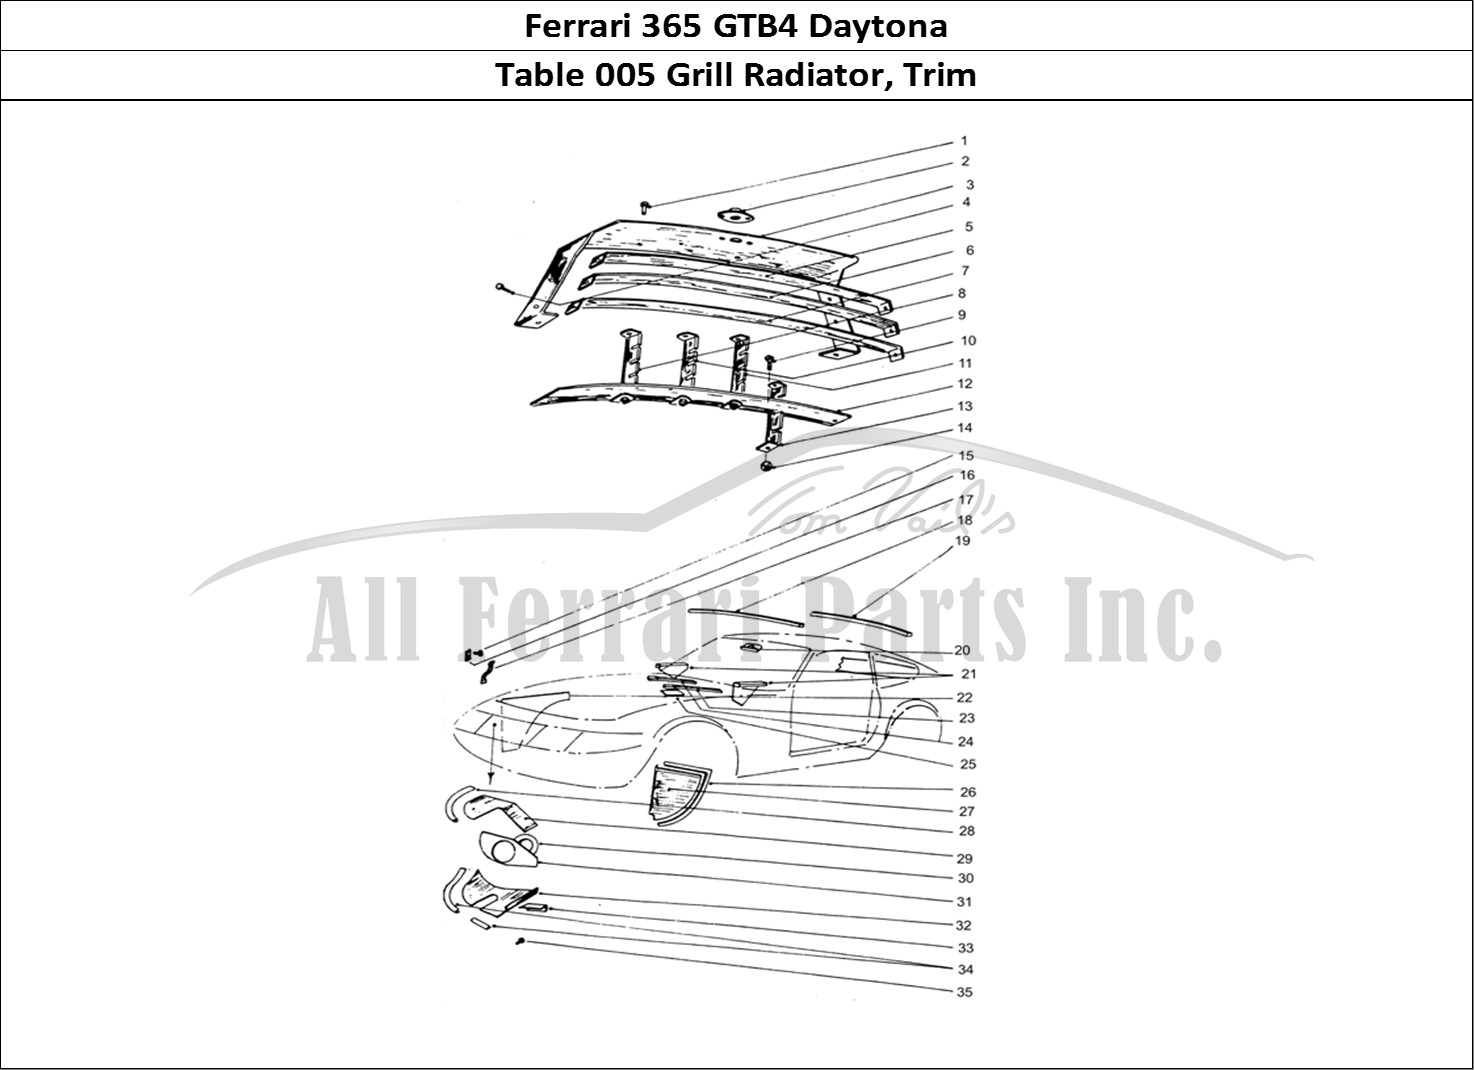 Ferrari Parts Ferrari 365 GTB4 Daytona (Coachwork) Page 005 Front Grill & covers